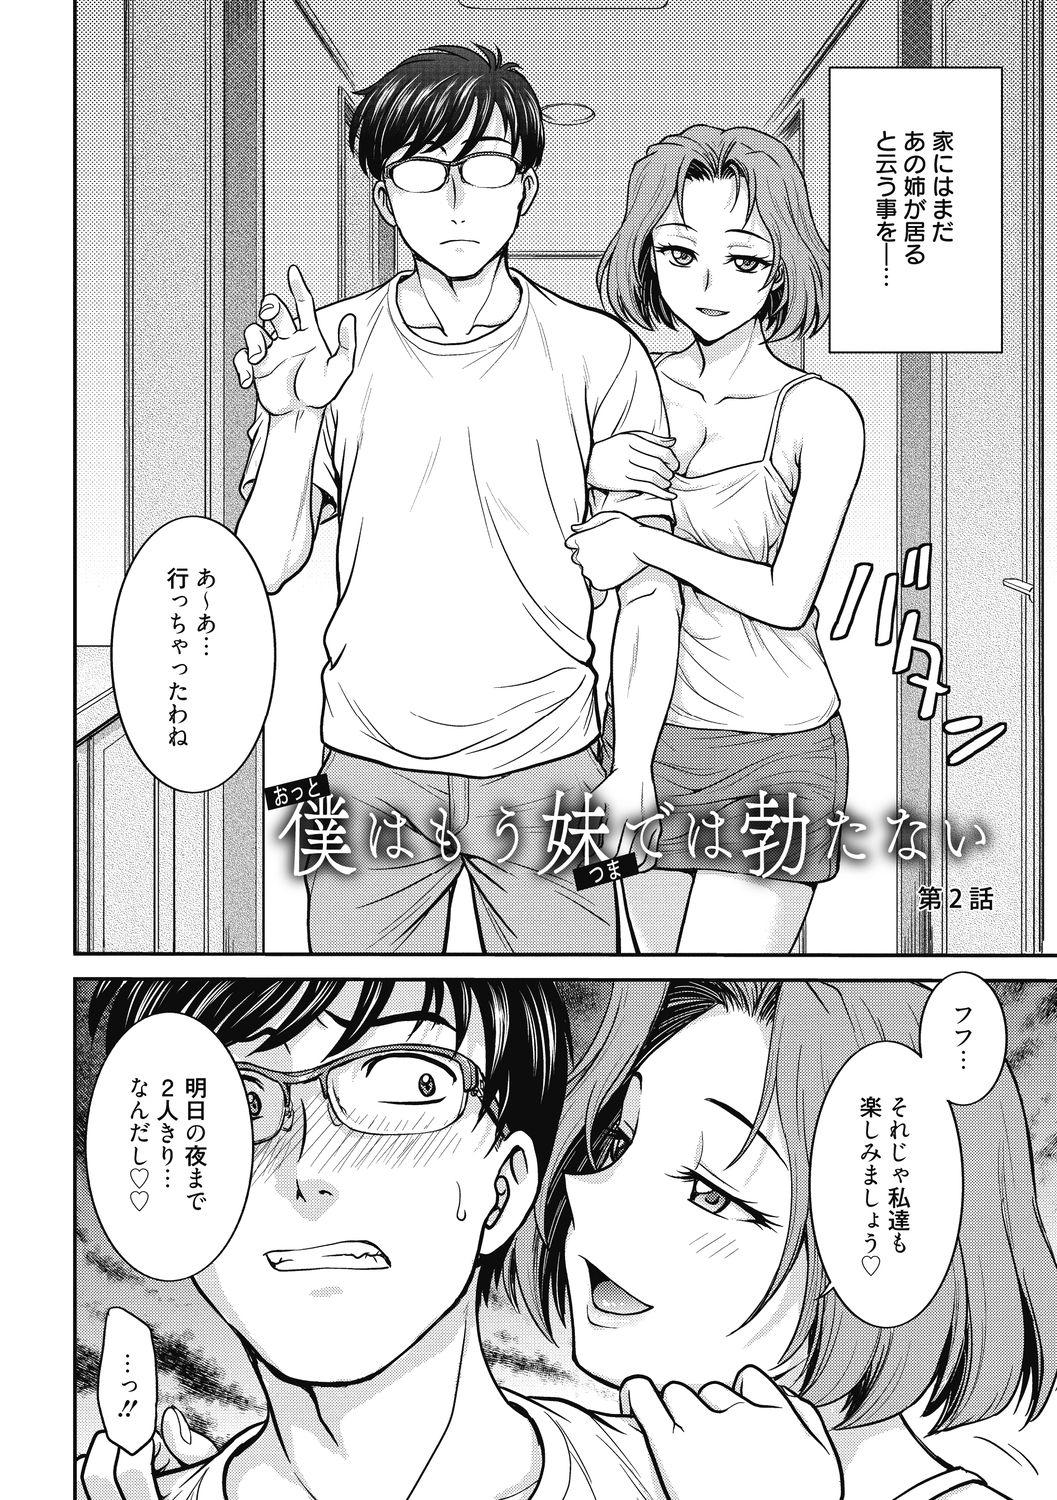 Kanojo no Shitagi o Nusundara... - I tried to steal her underwear... 111